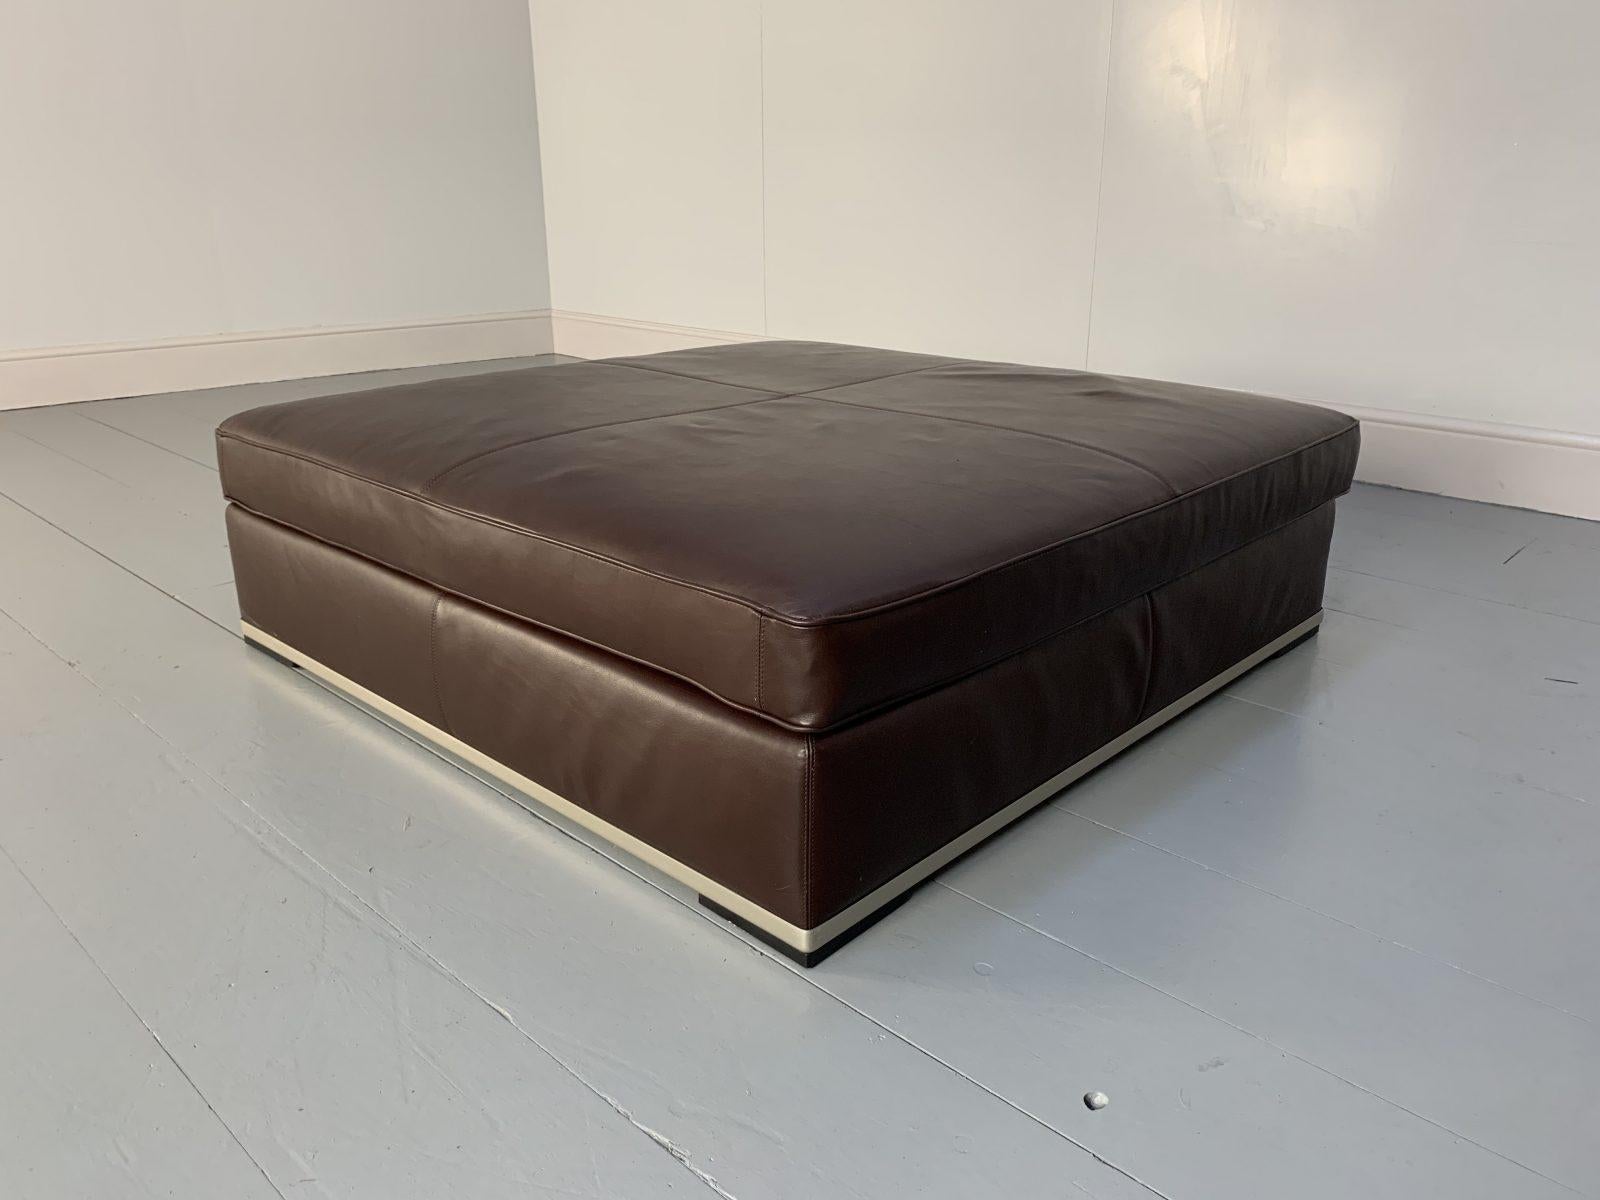 Contemporary B&B Italia “Maxalto Apta” Footstool Sofa Table in Dark Brown “Gamma” Leather For Sale